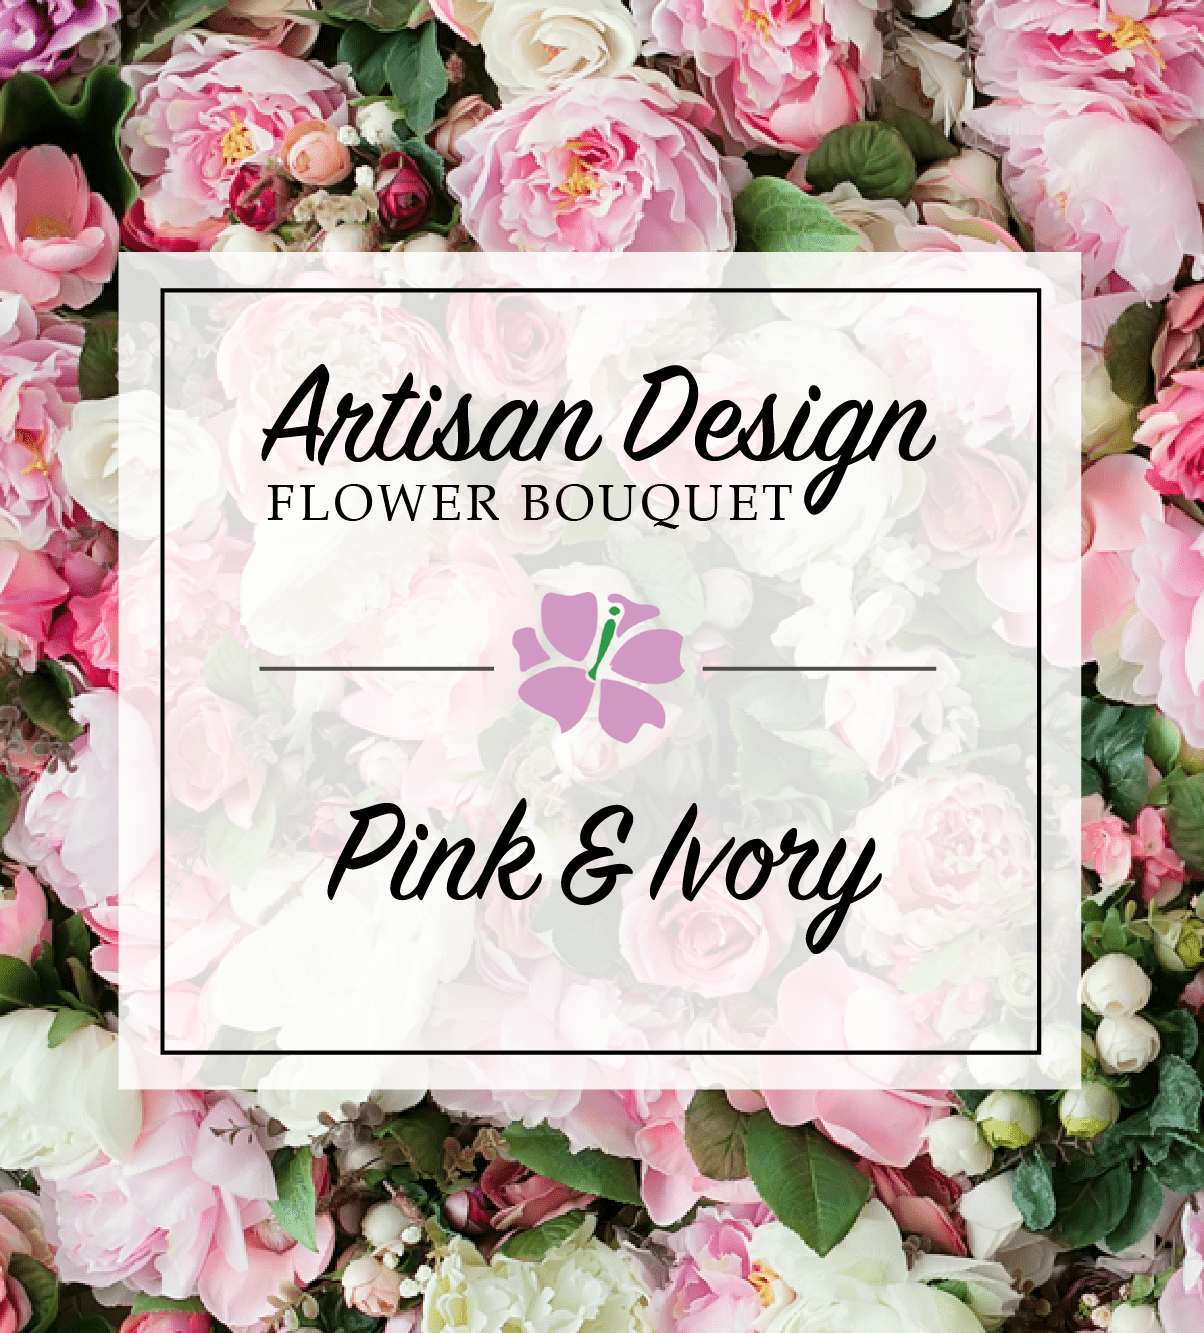 Artist's Design: Pink & Ivory | Avas Flowers